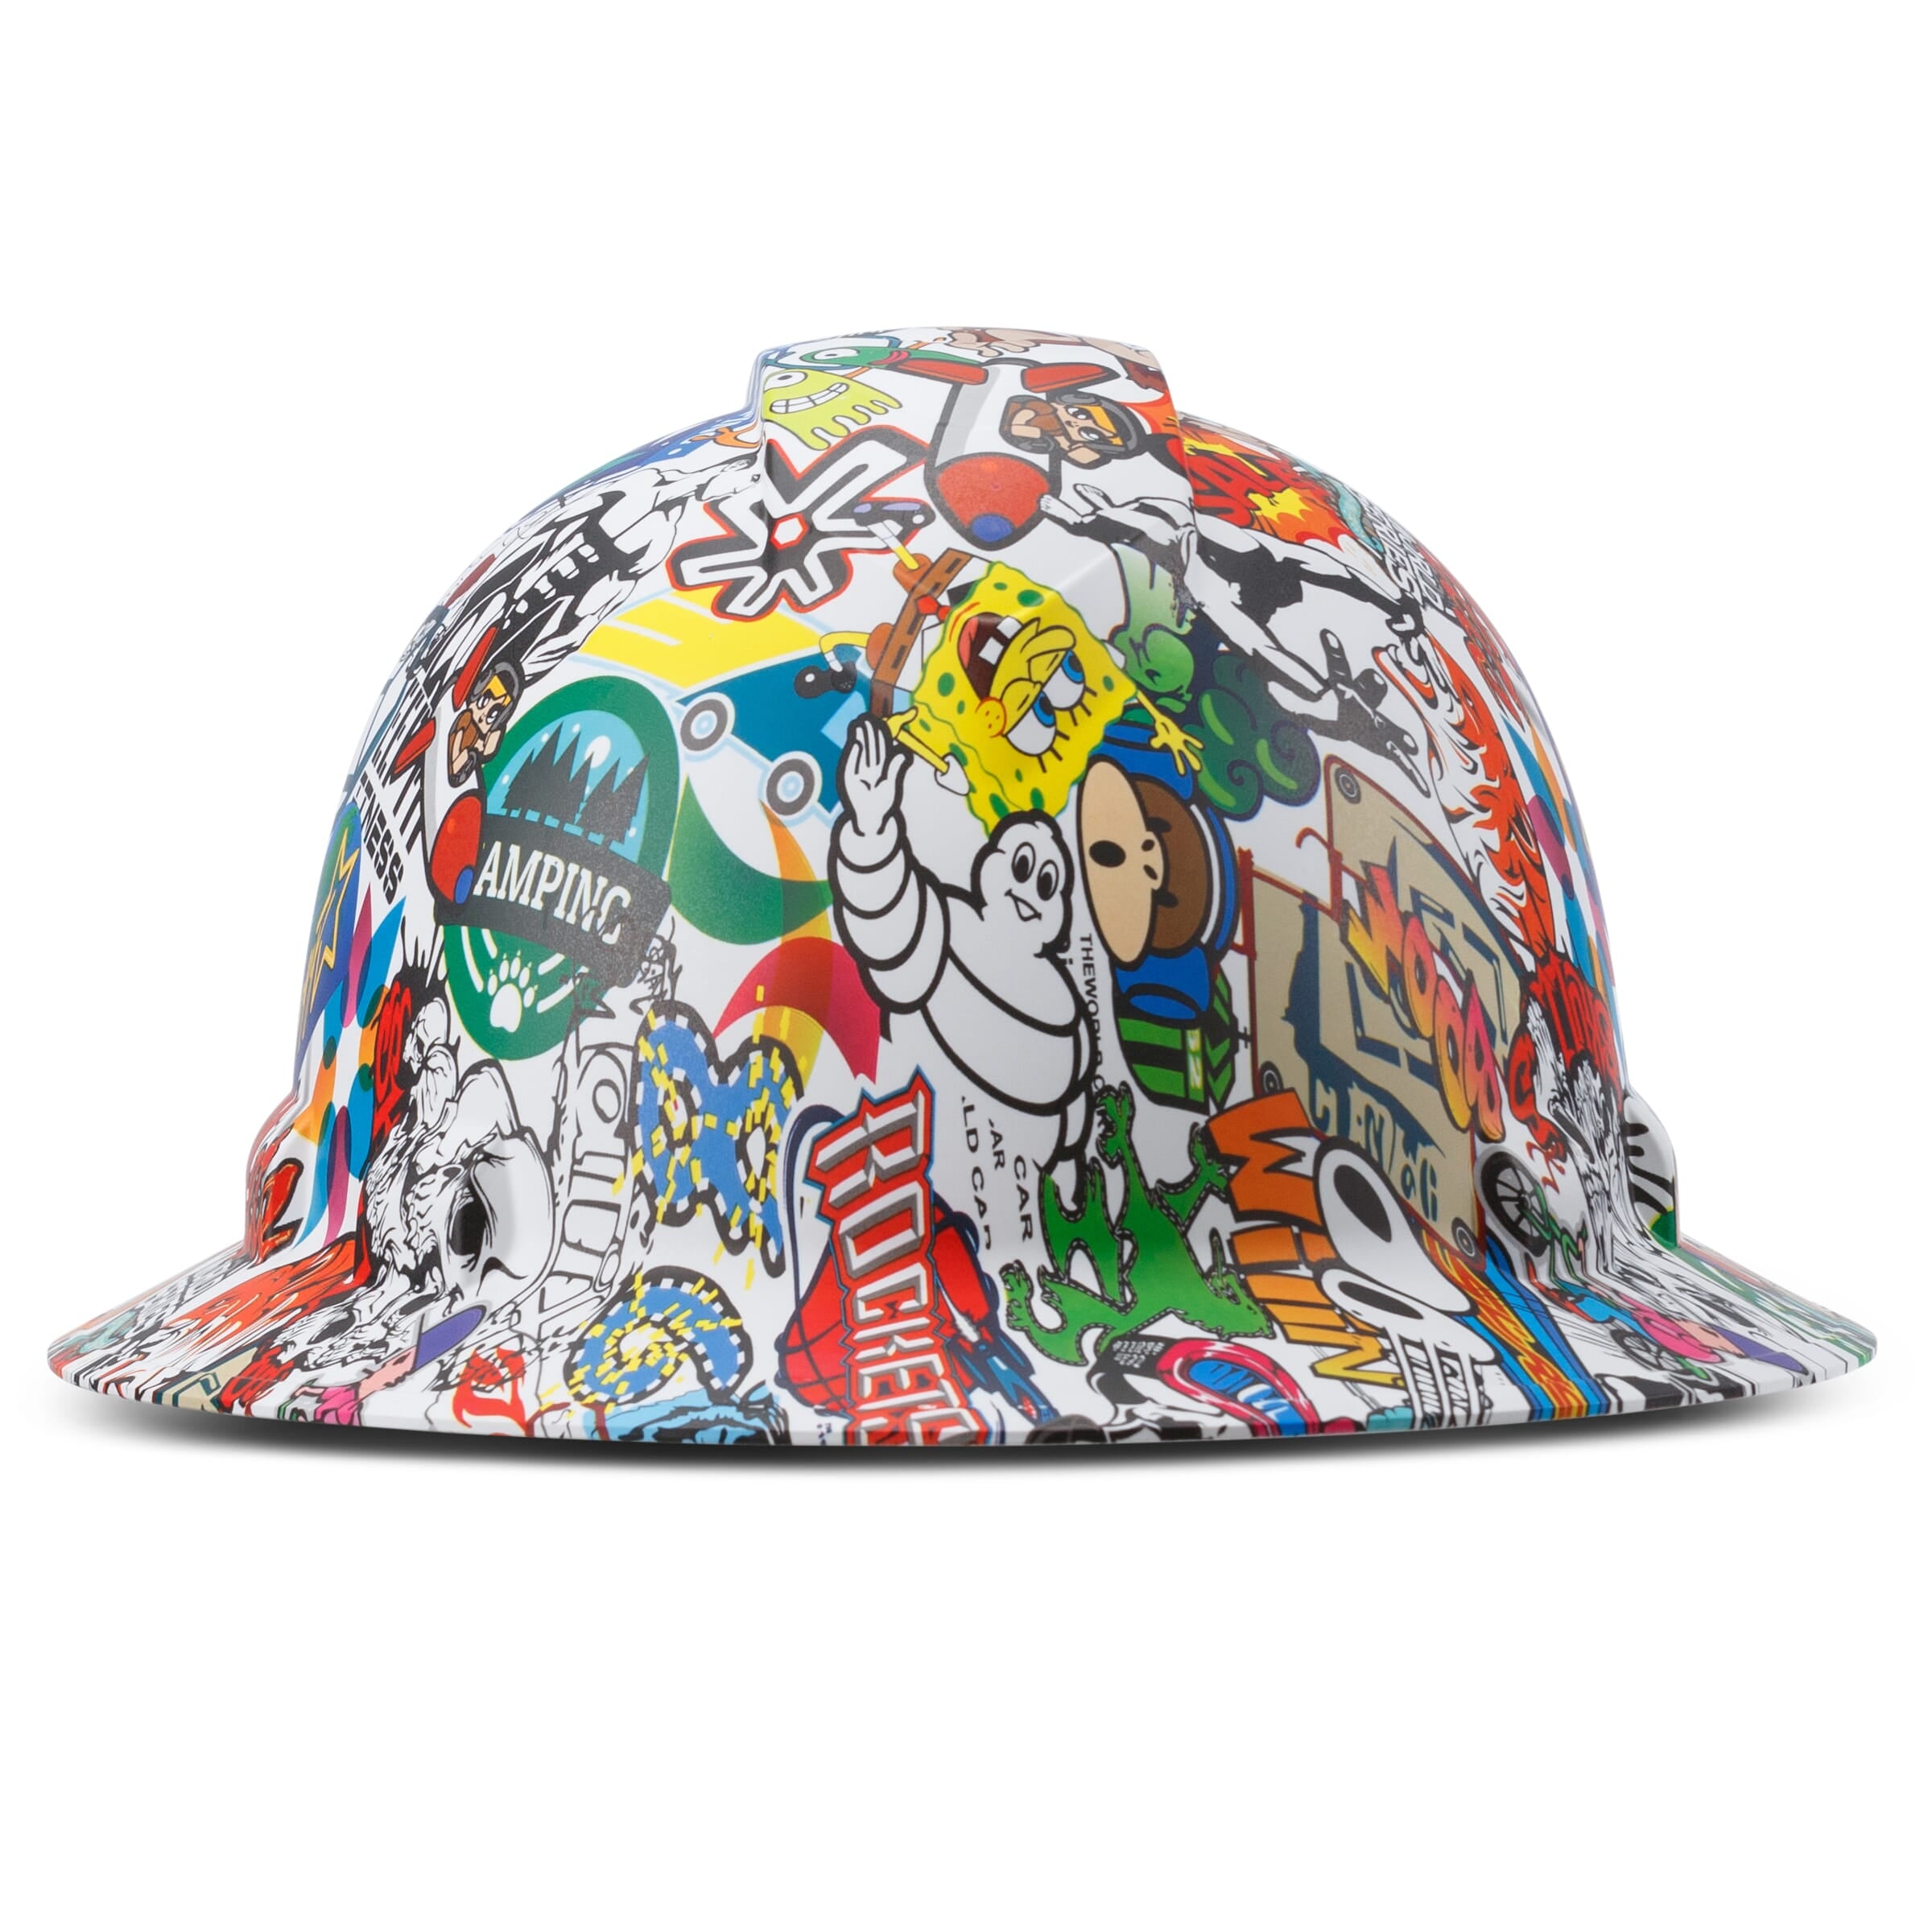 Full Brim Pyramex Hard Hat, Custom Character Chaos Design, Safety Helmet, 6 Point